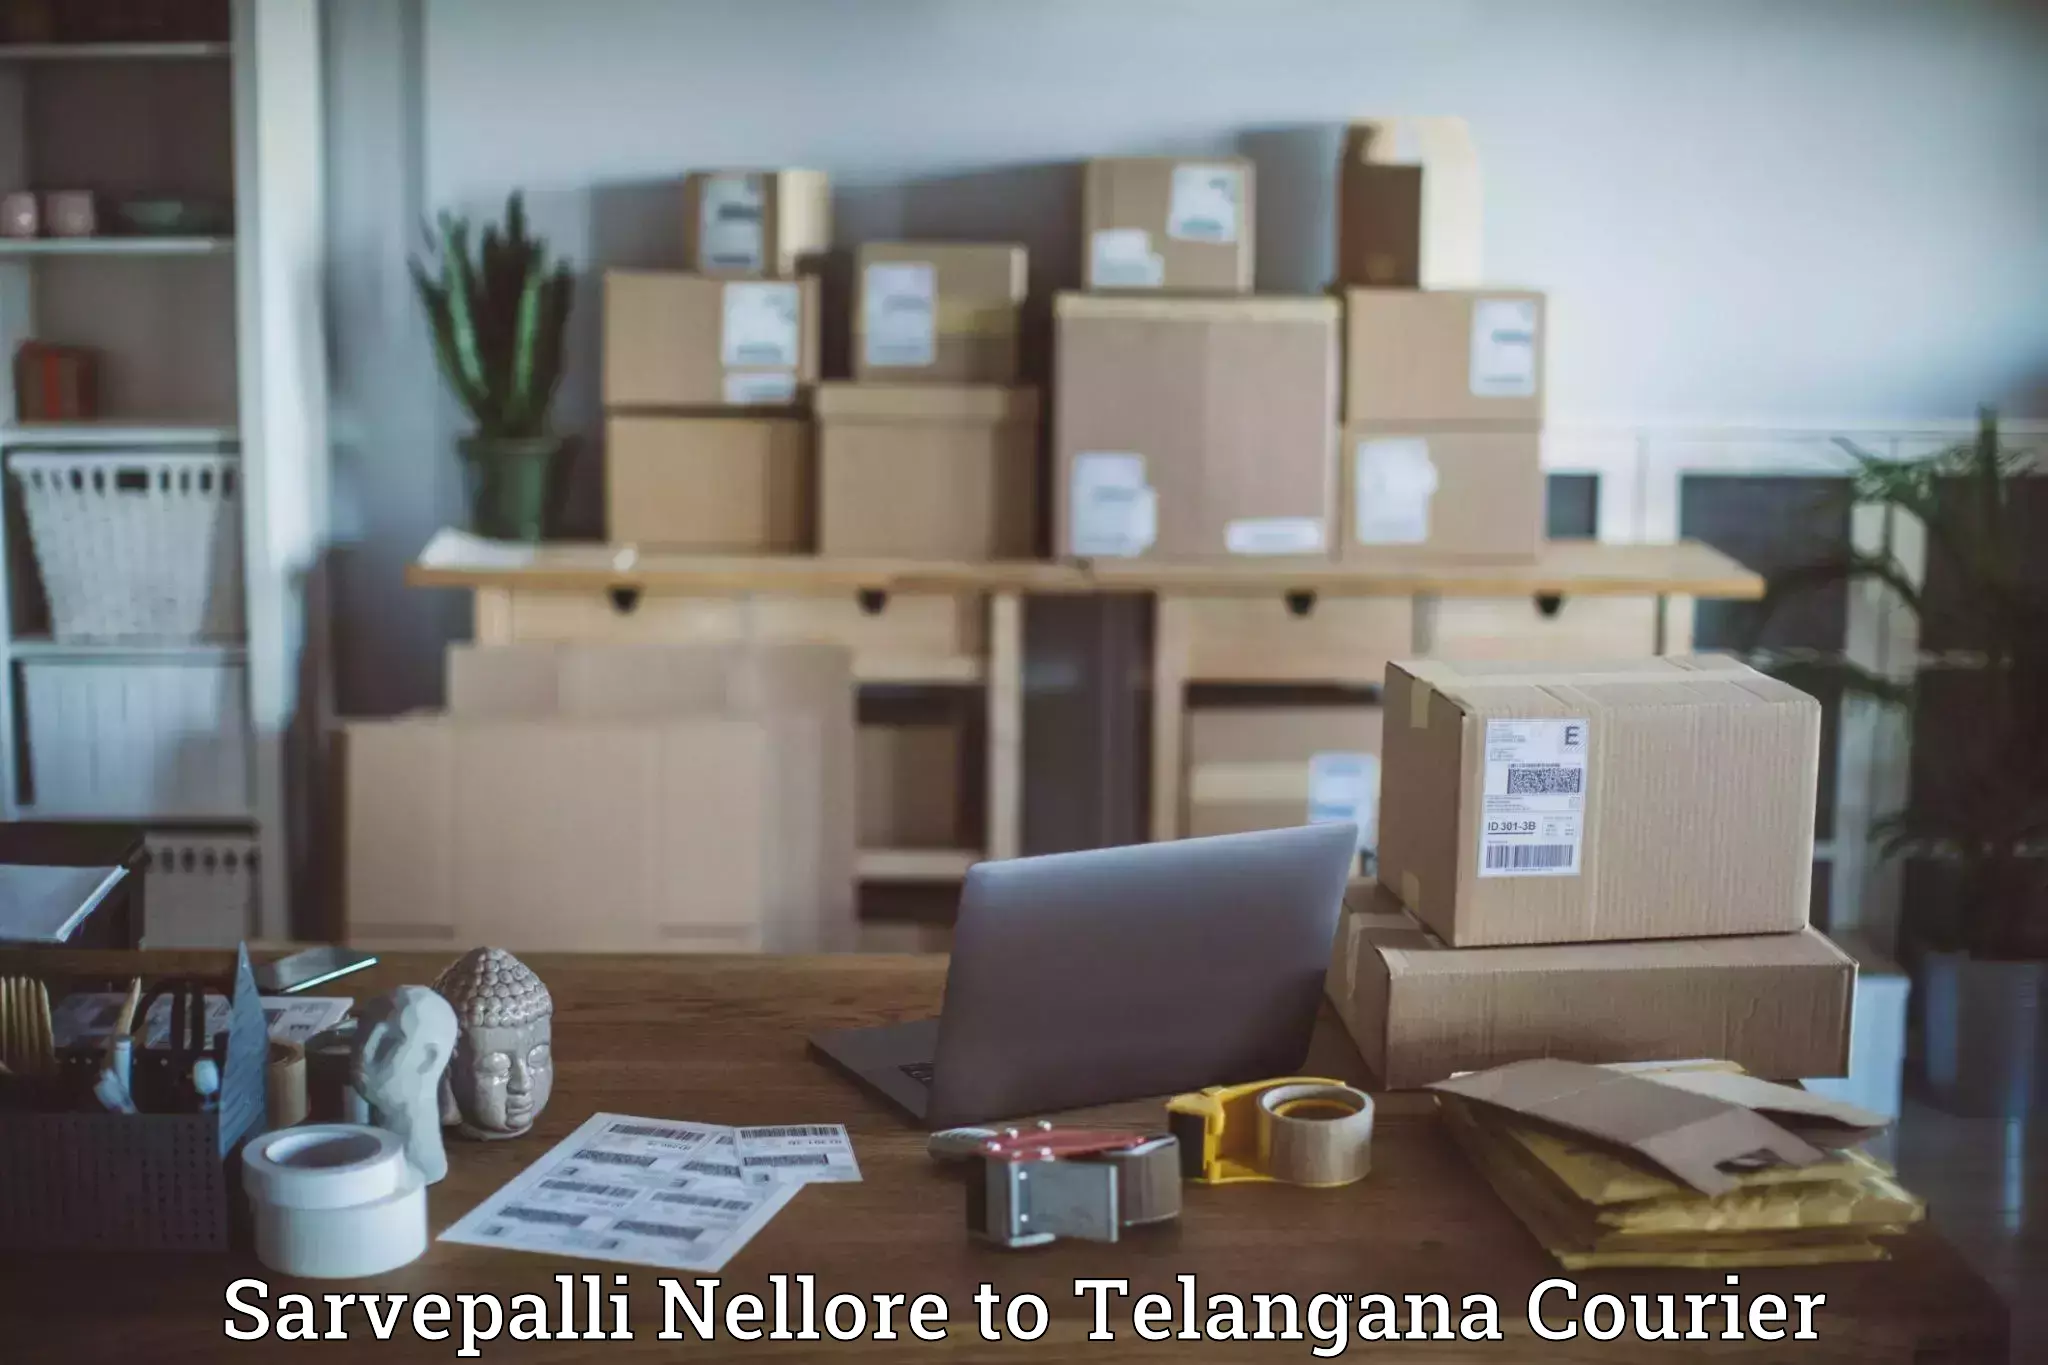 Courier service innovation Sarvepalli Nellore to Madnoor